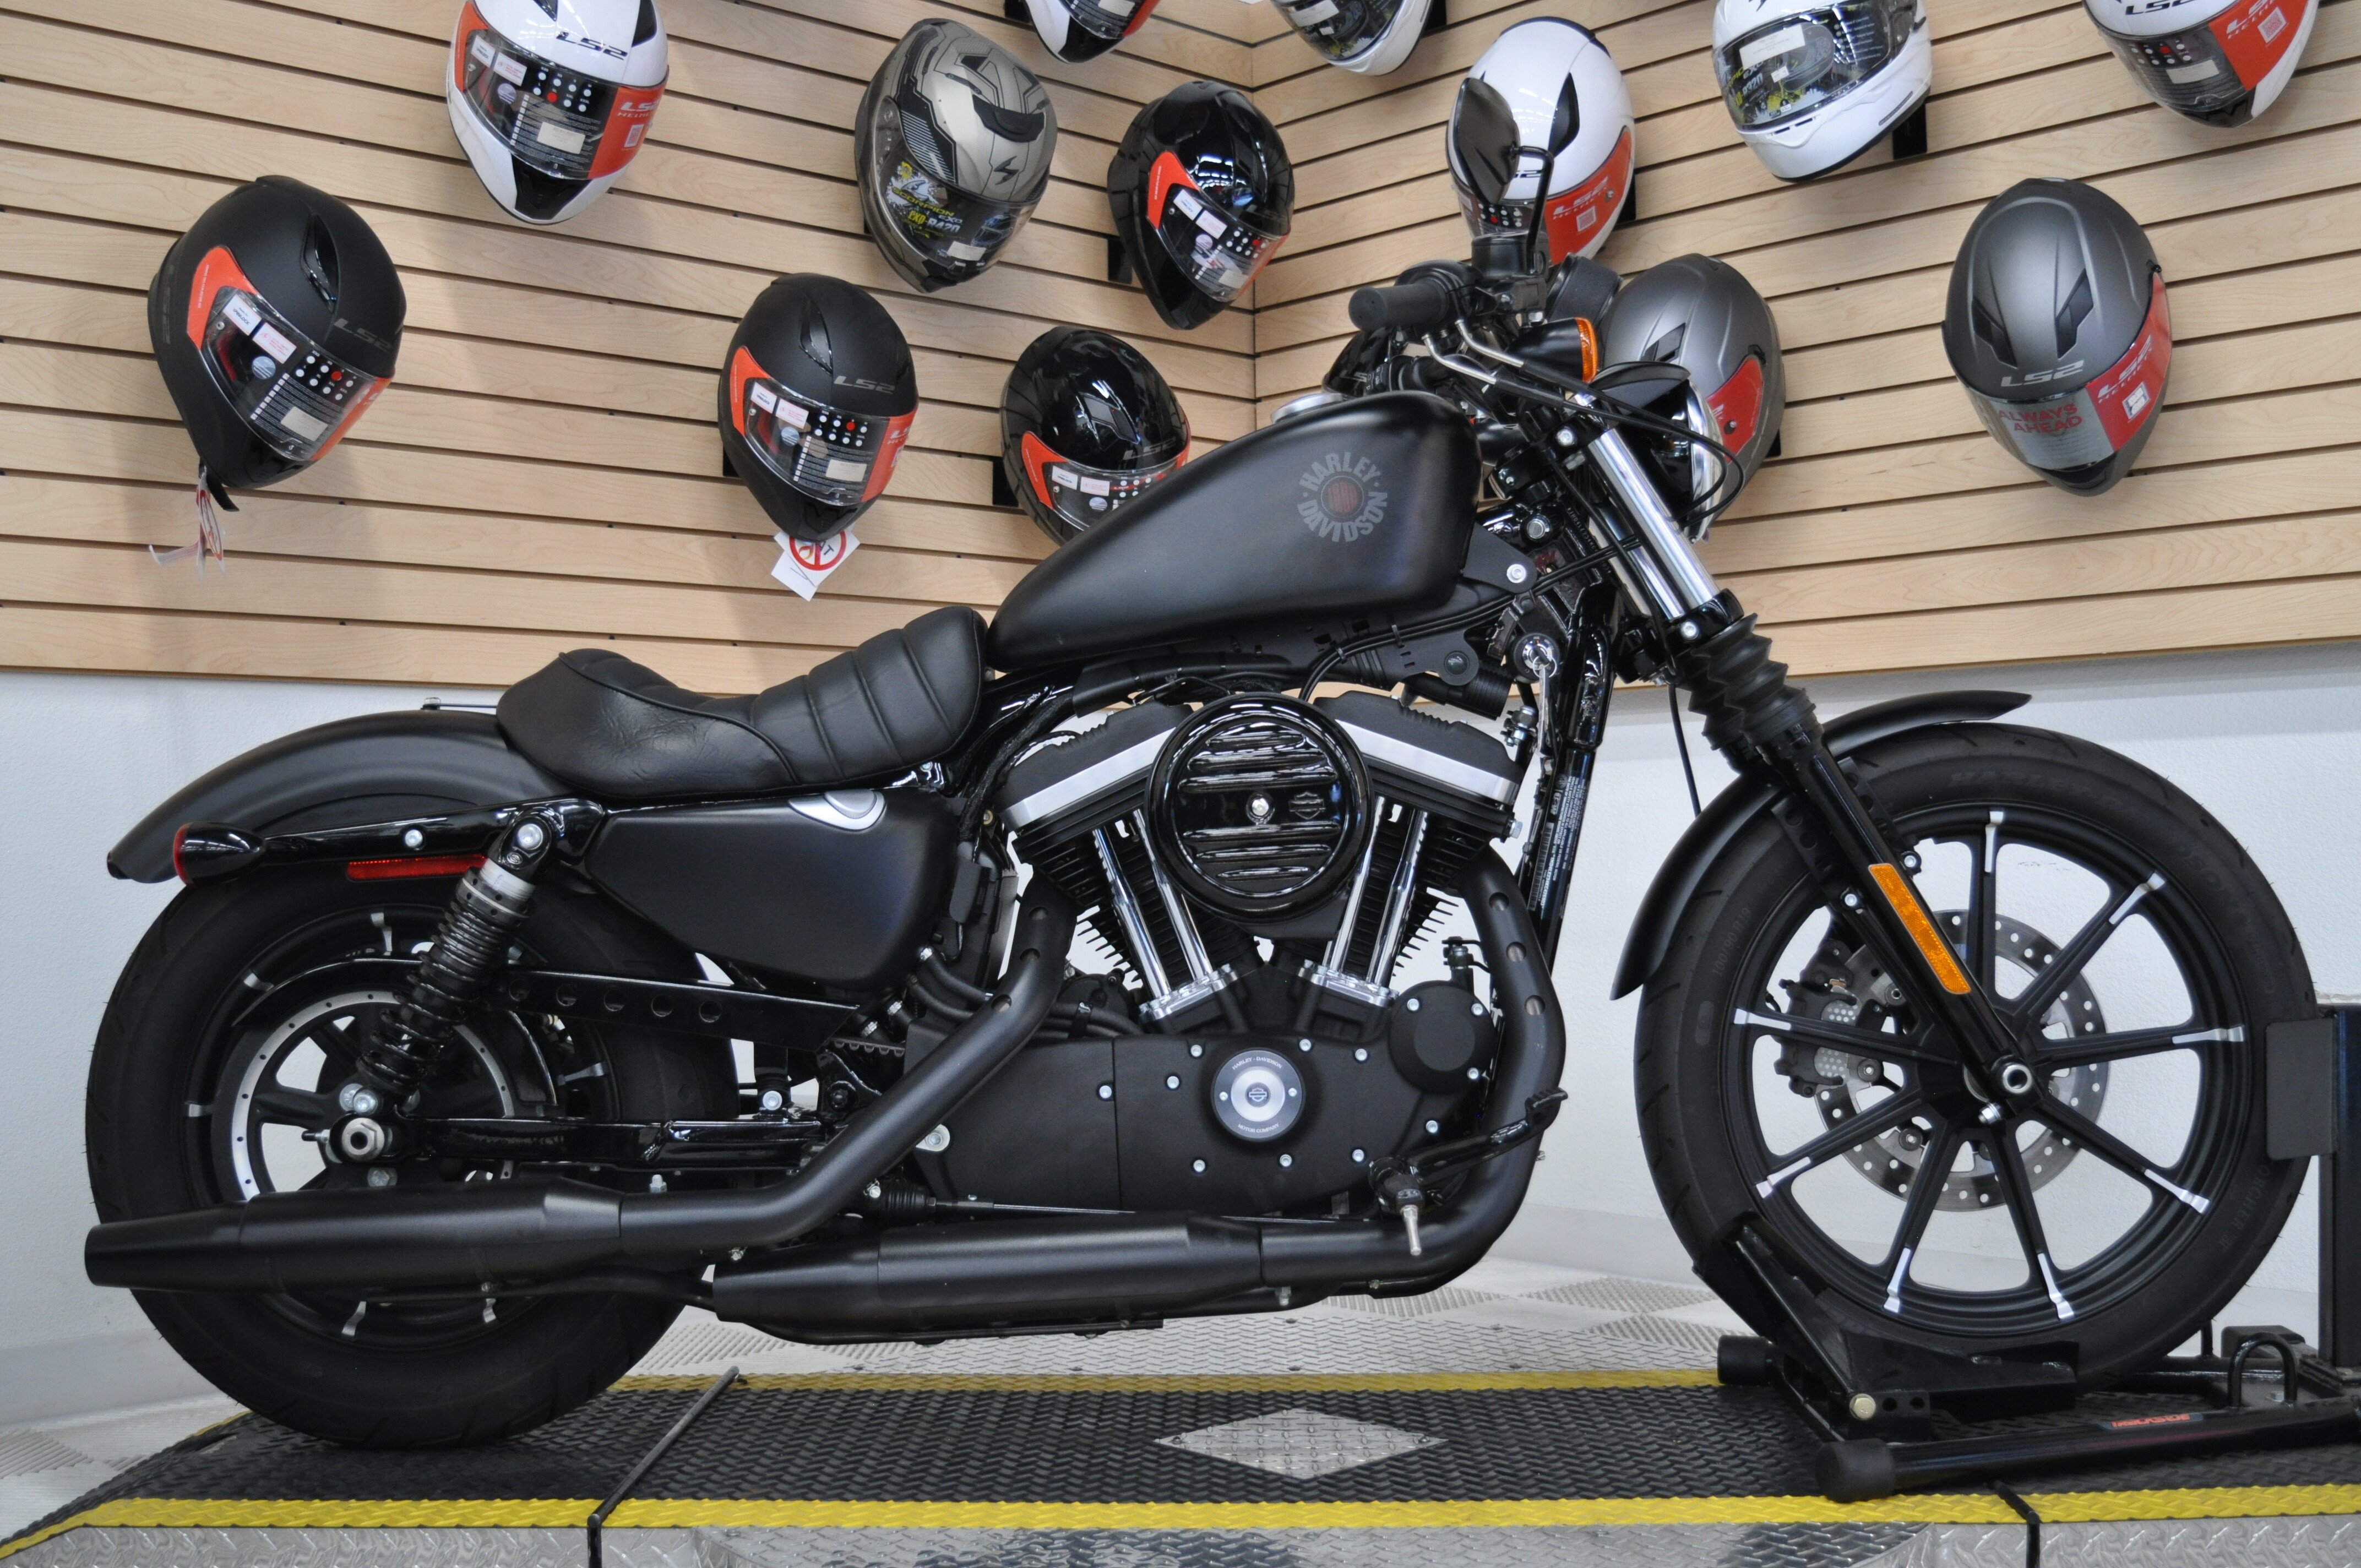 2018 Harley Davidson Iron 883 For Sale Promotion Off55